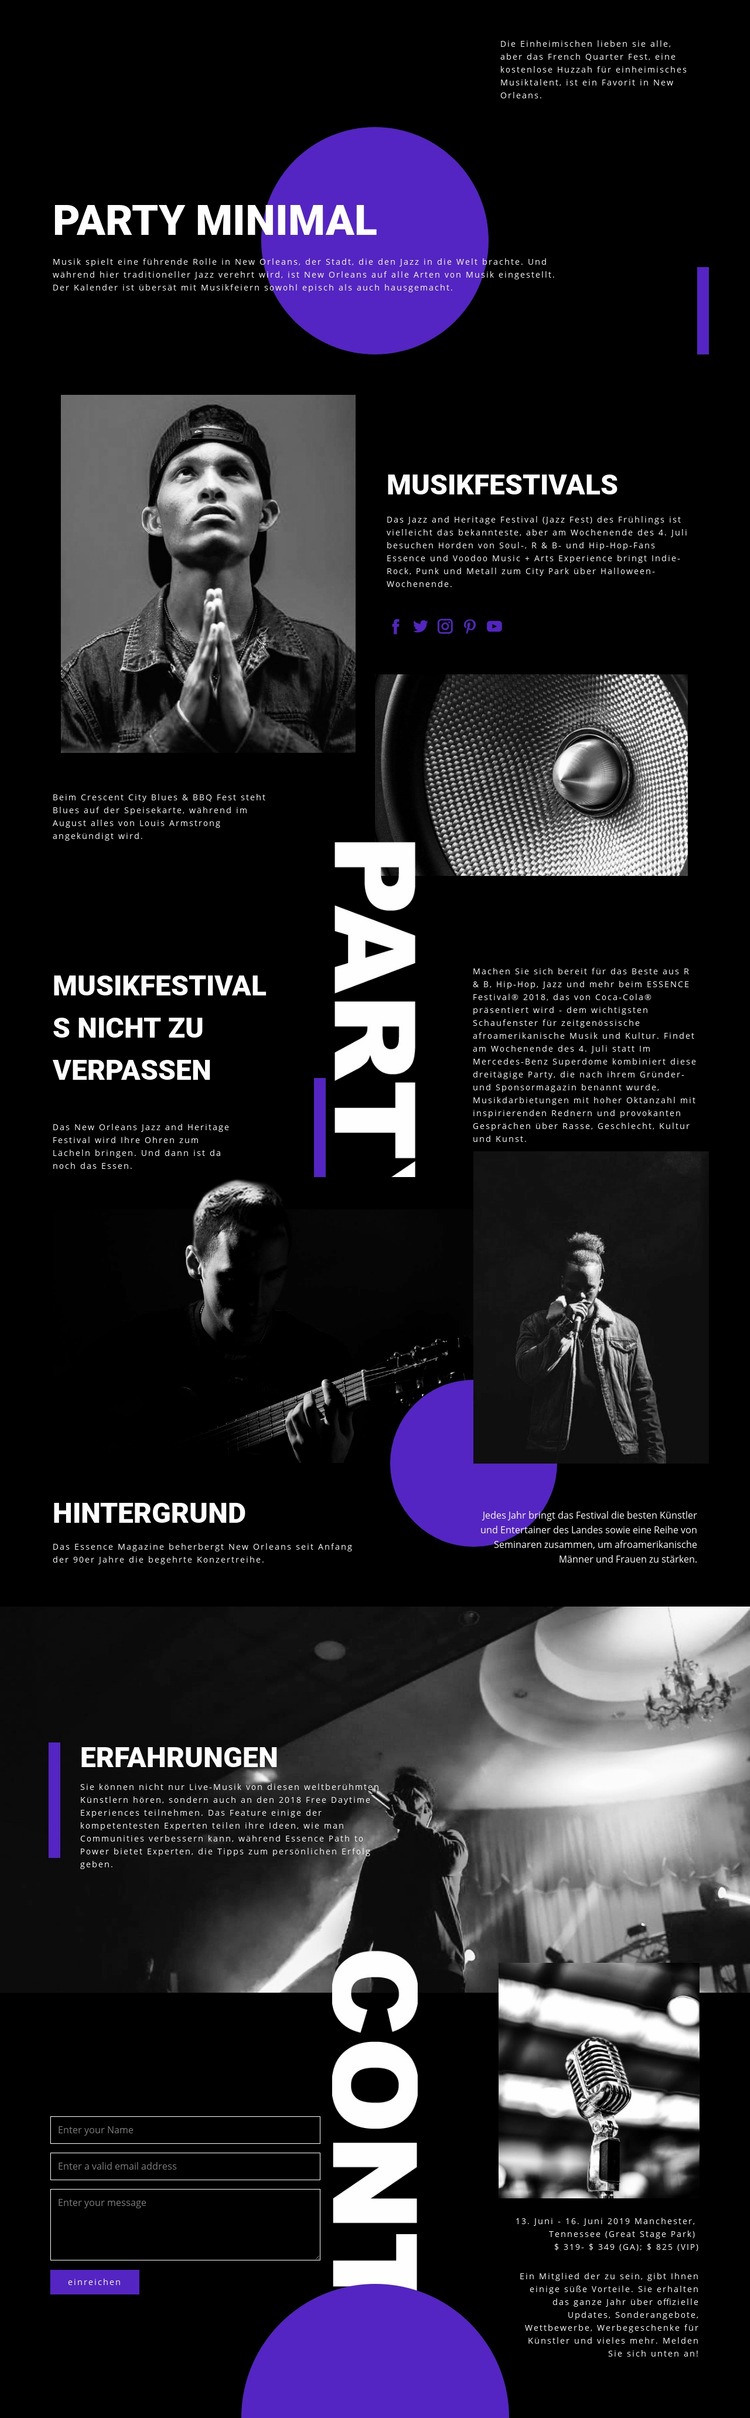 Musikfestival Website design